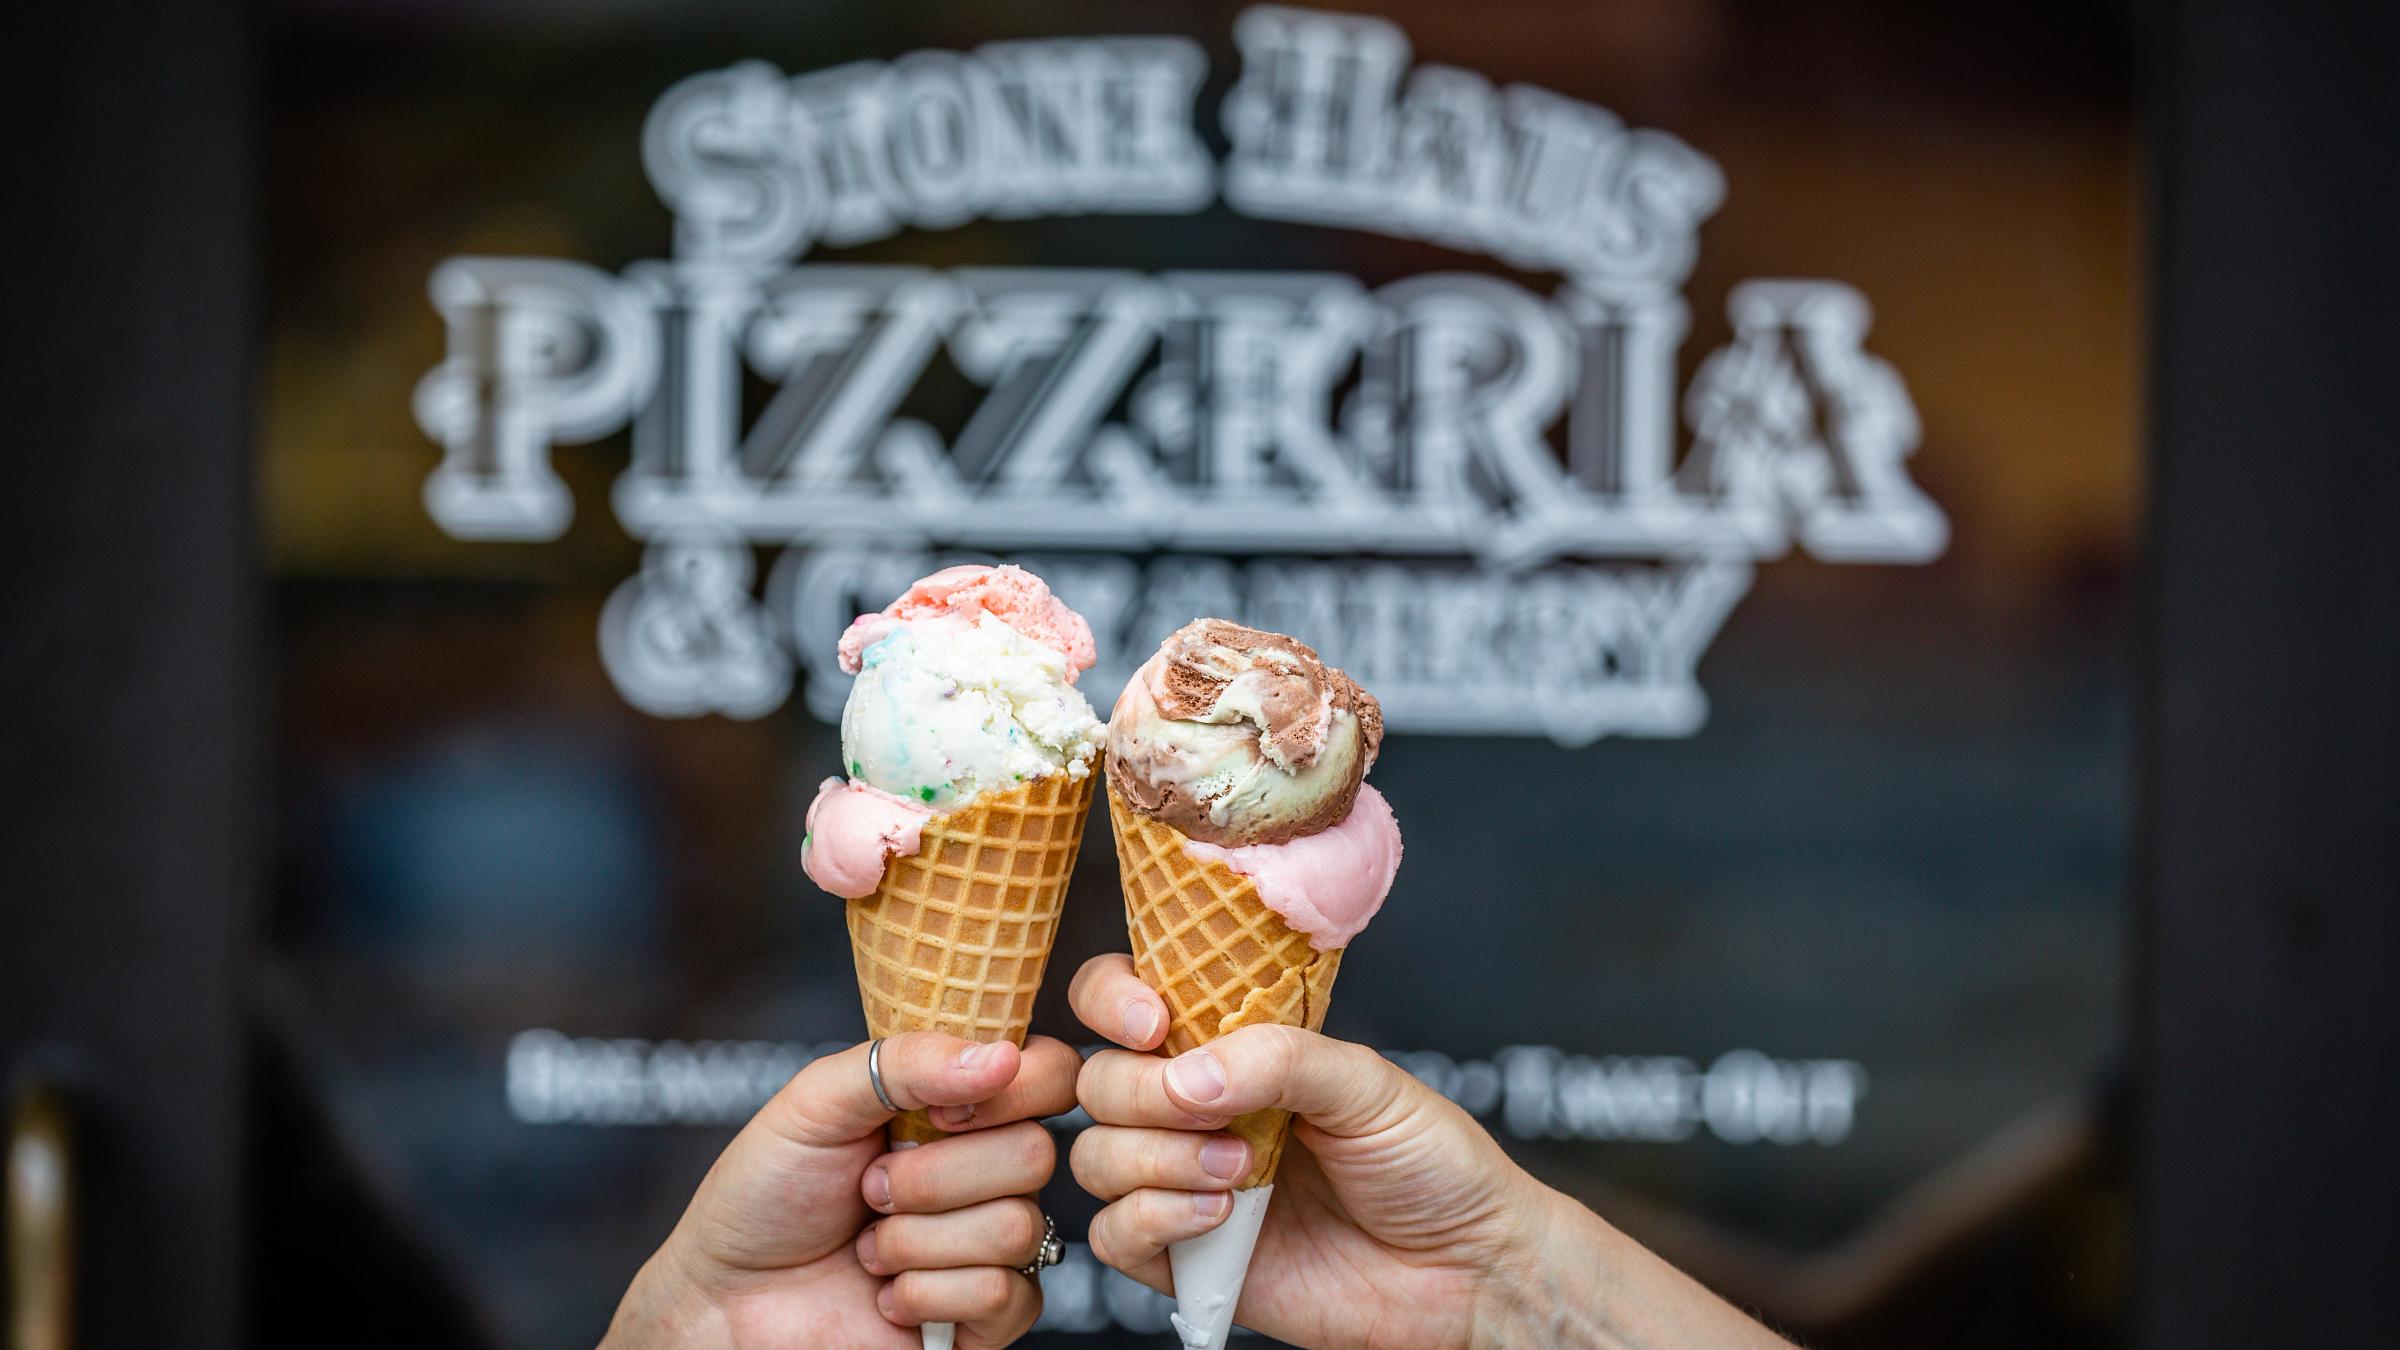 Two ice cream cones from Stone Haus Pizzeria & Creamery at Solitude Mountain Resort